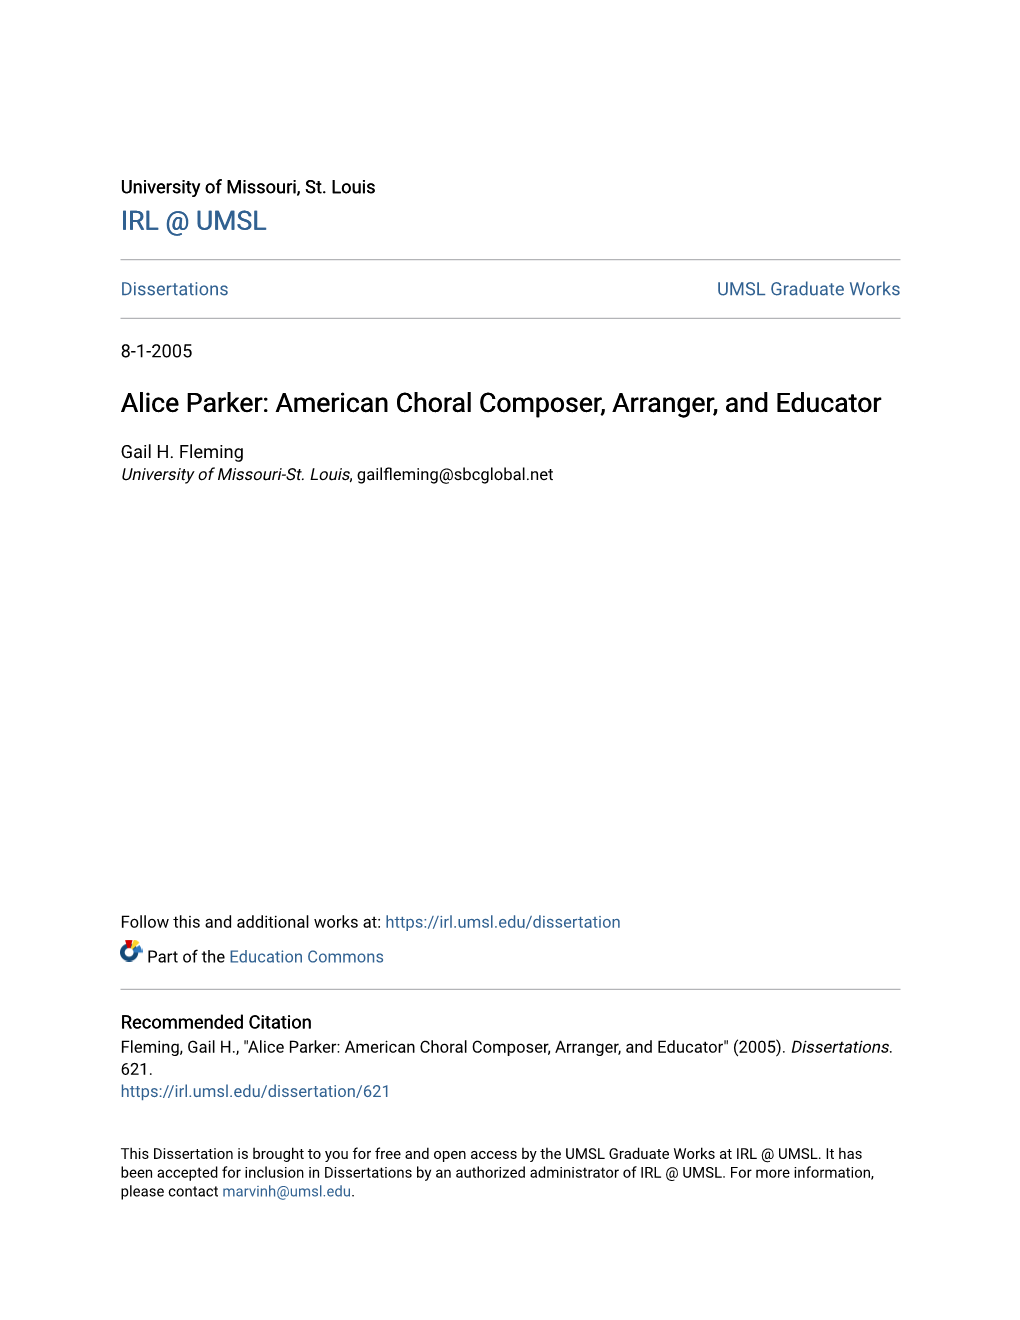 Alice Parker: American Choral Composer, Arranger, and Educator